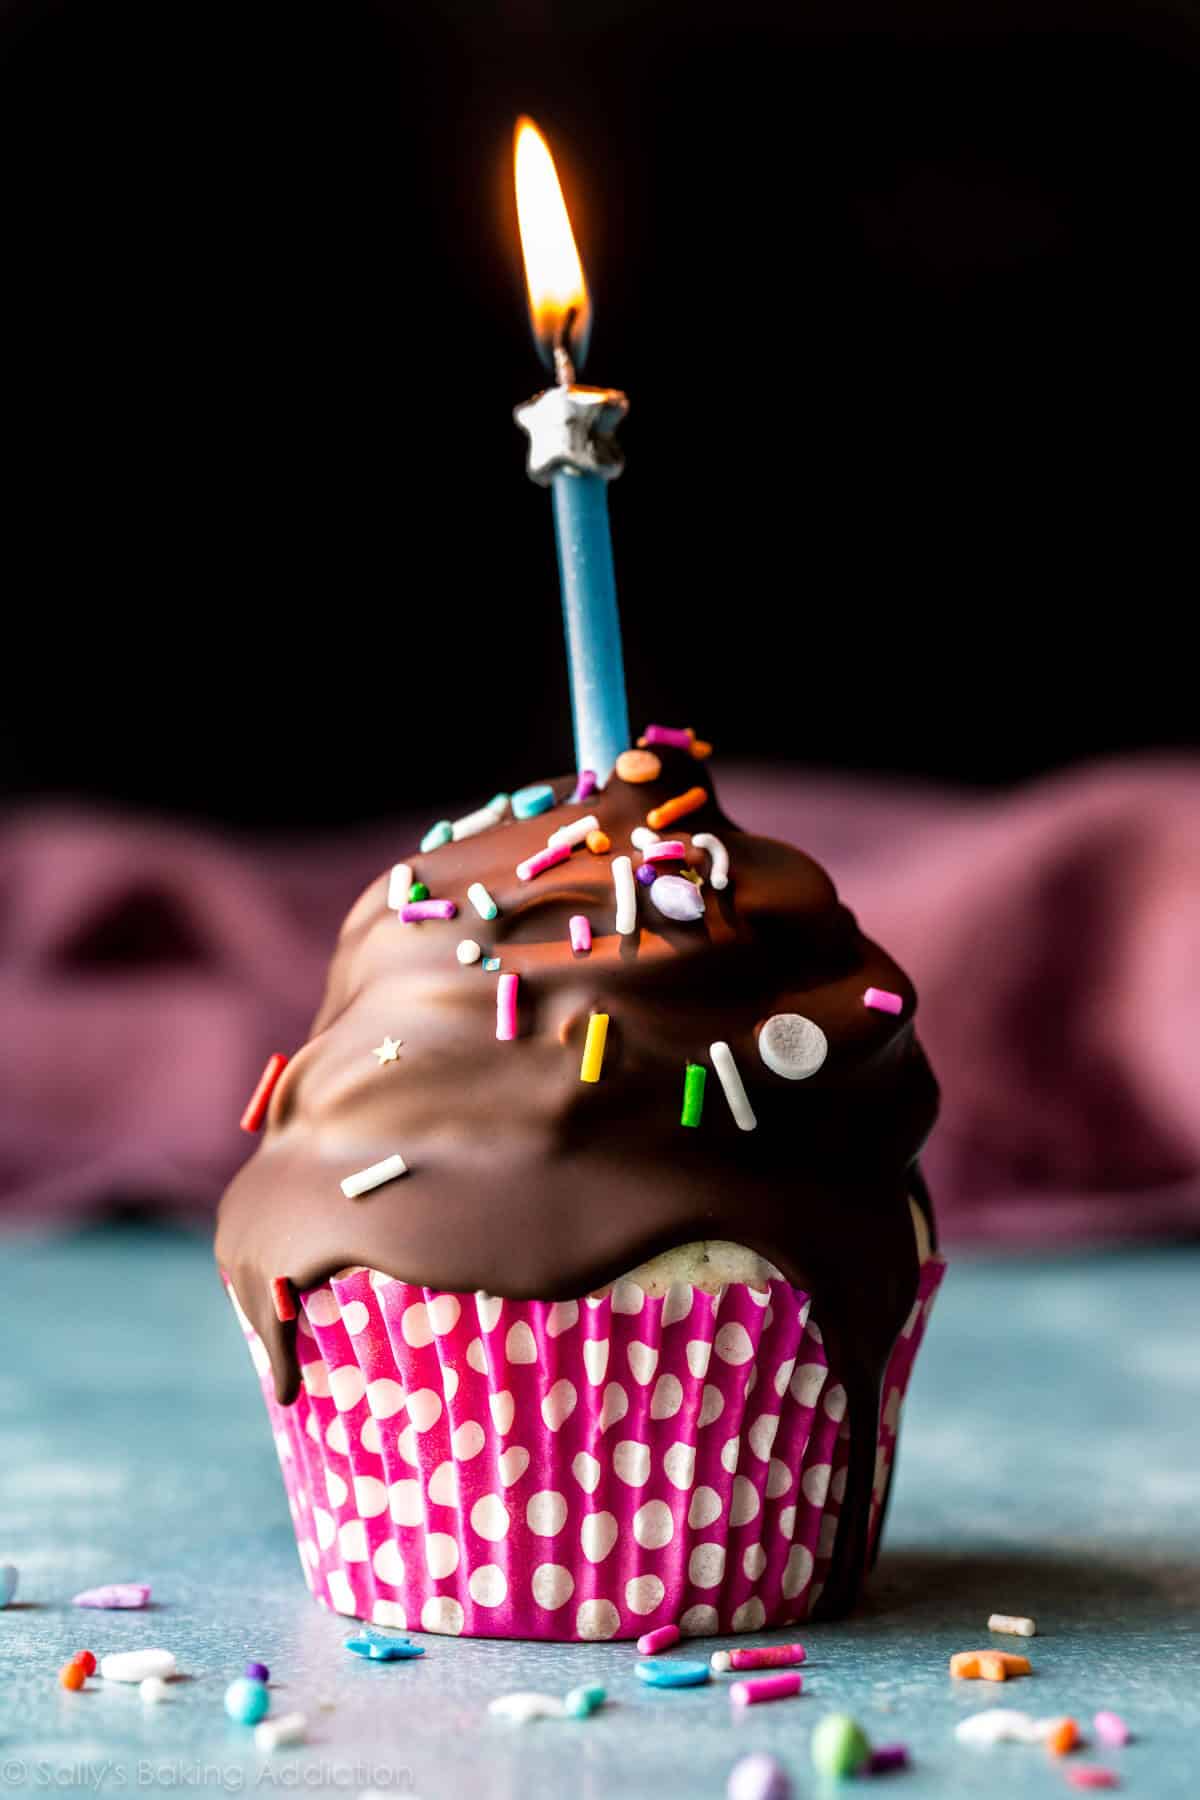 Ultimate Birthday Cupcakes - Sally's Baking Addiction